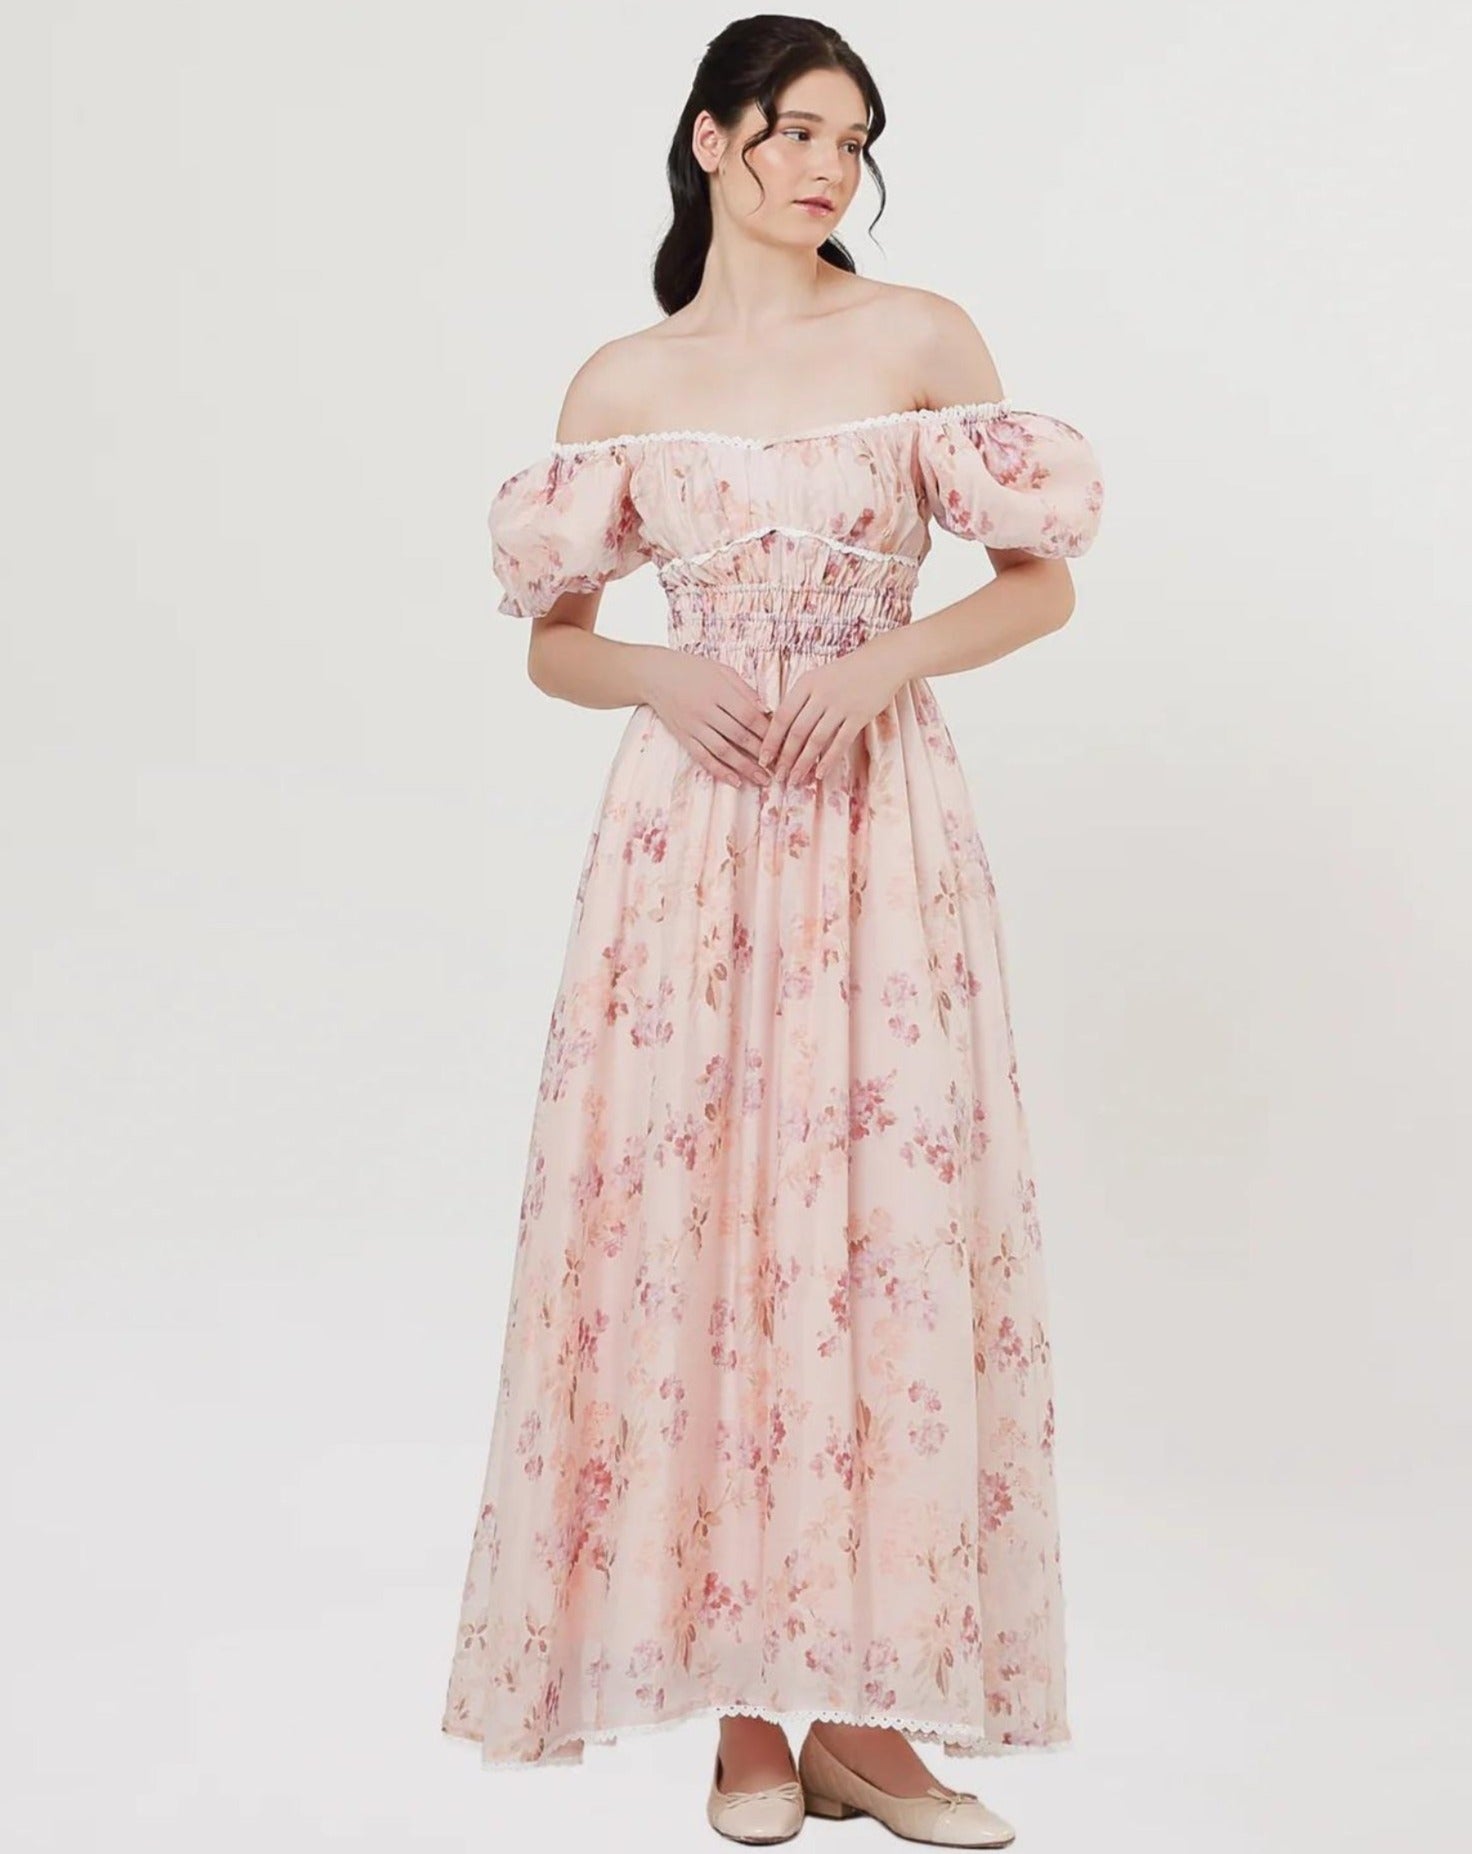 Isabella Dress in Floral Pink